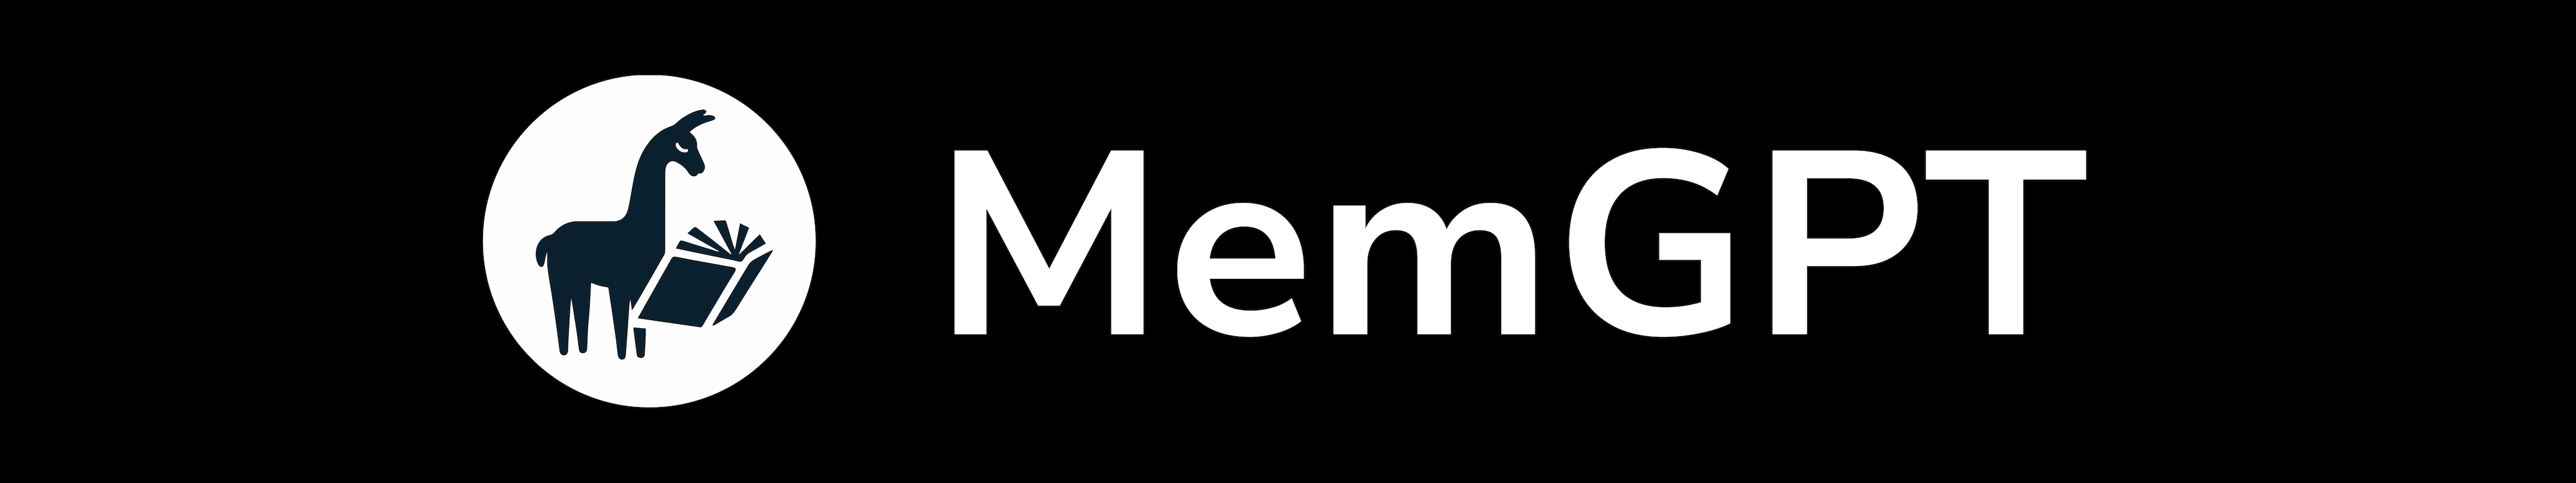 MemGPT logo